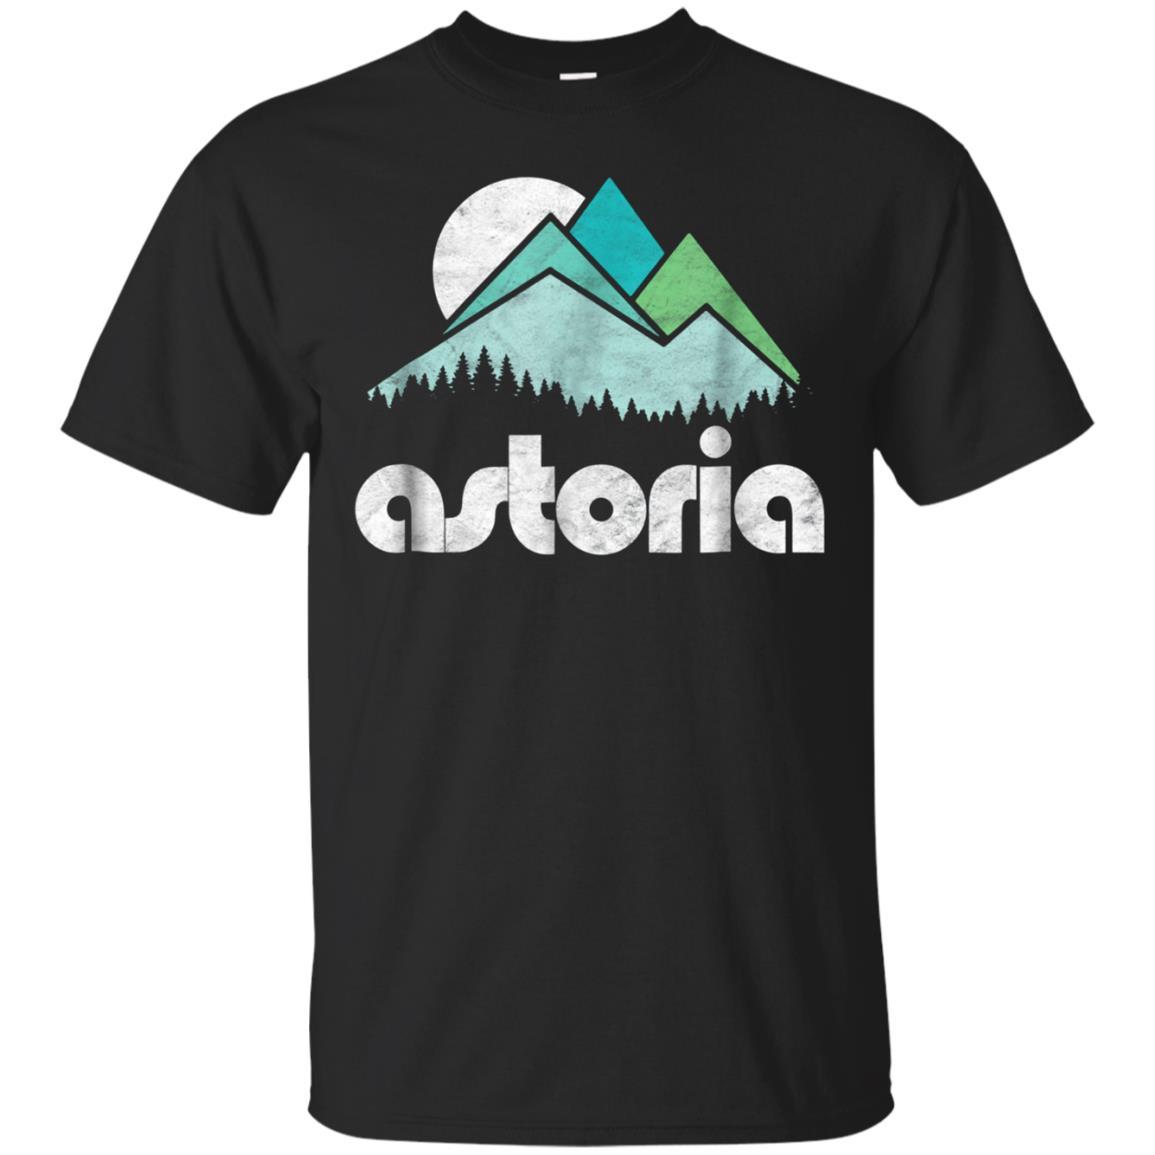 Astoria Oregon Vintage Minimalist Mountains Graphic T Shirt